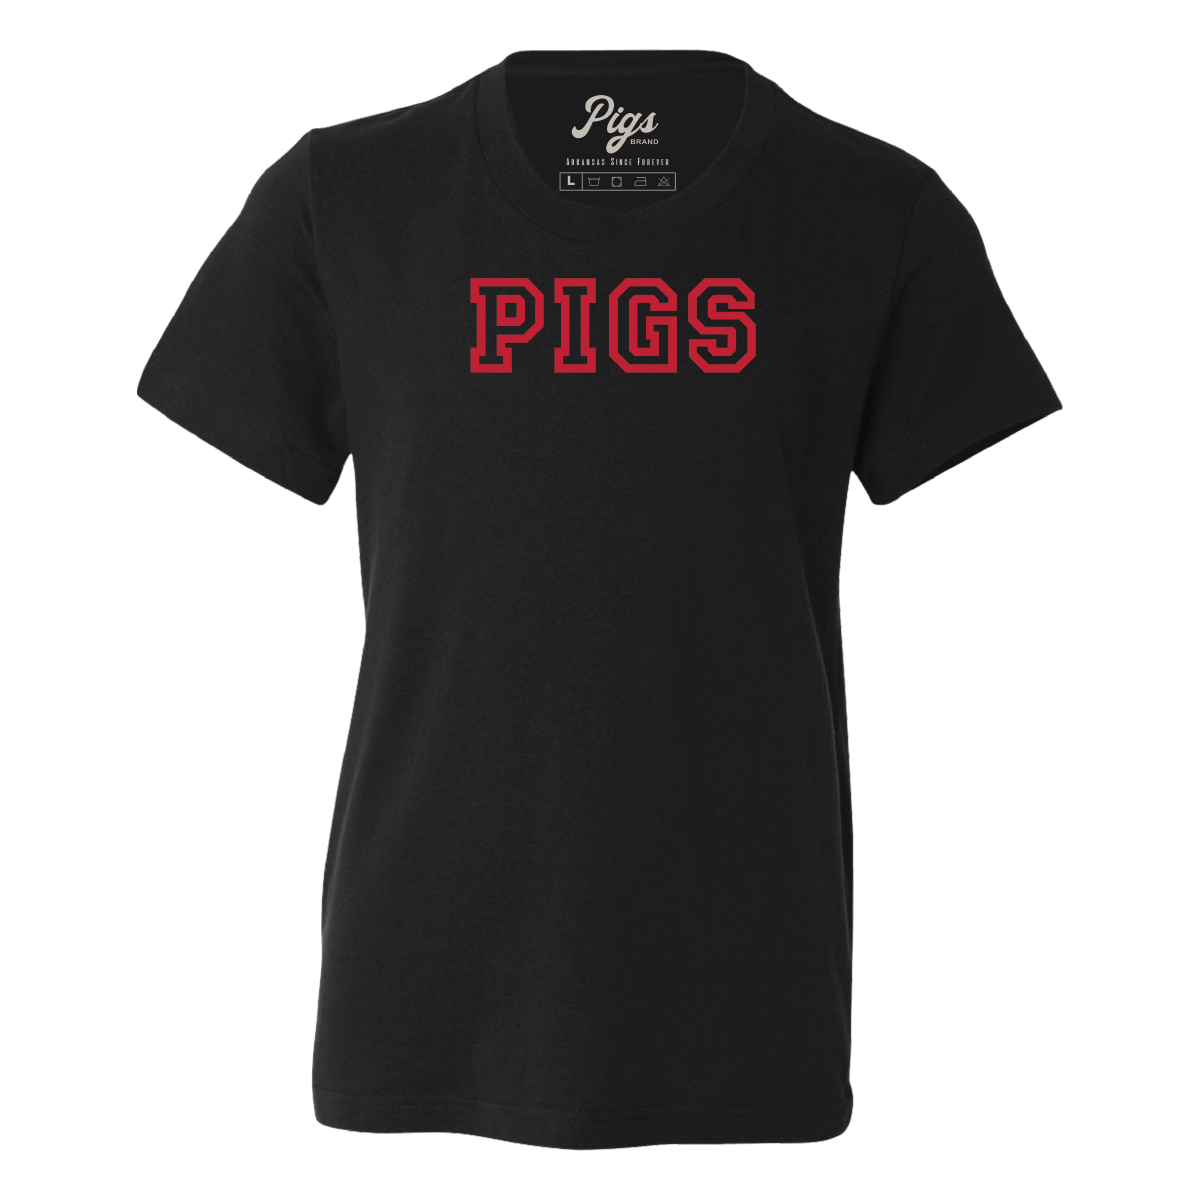 PIGS - Kids - Black